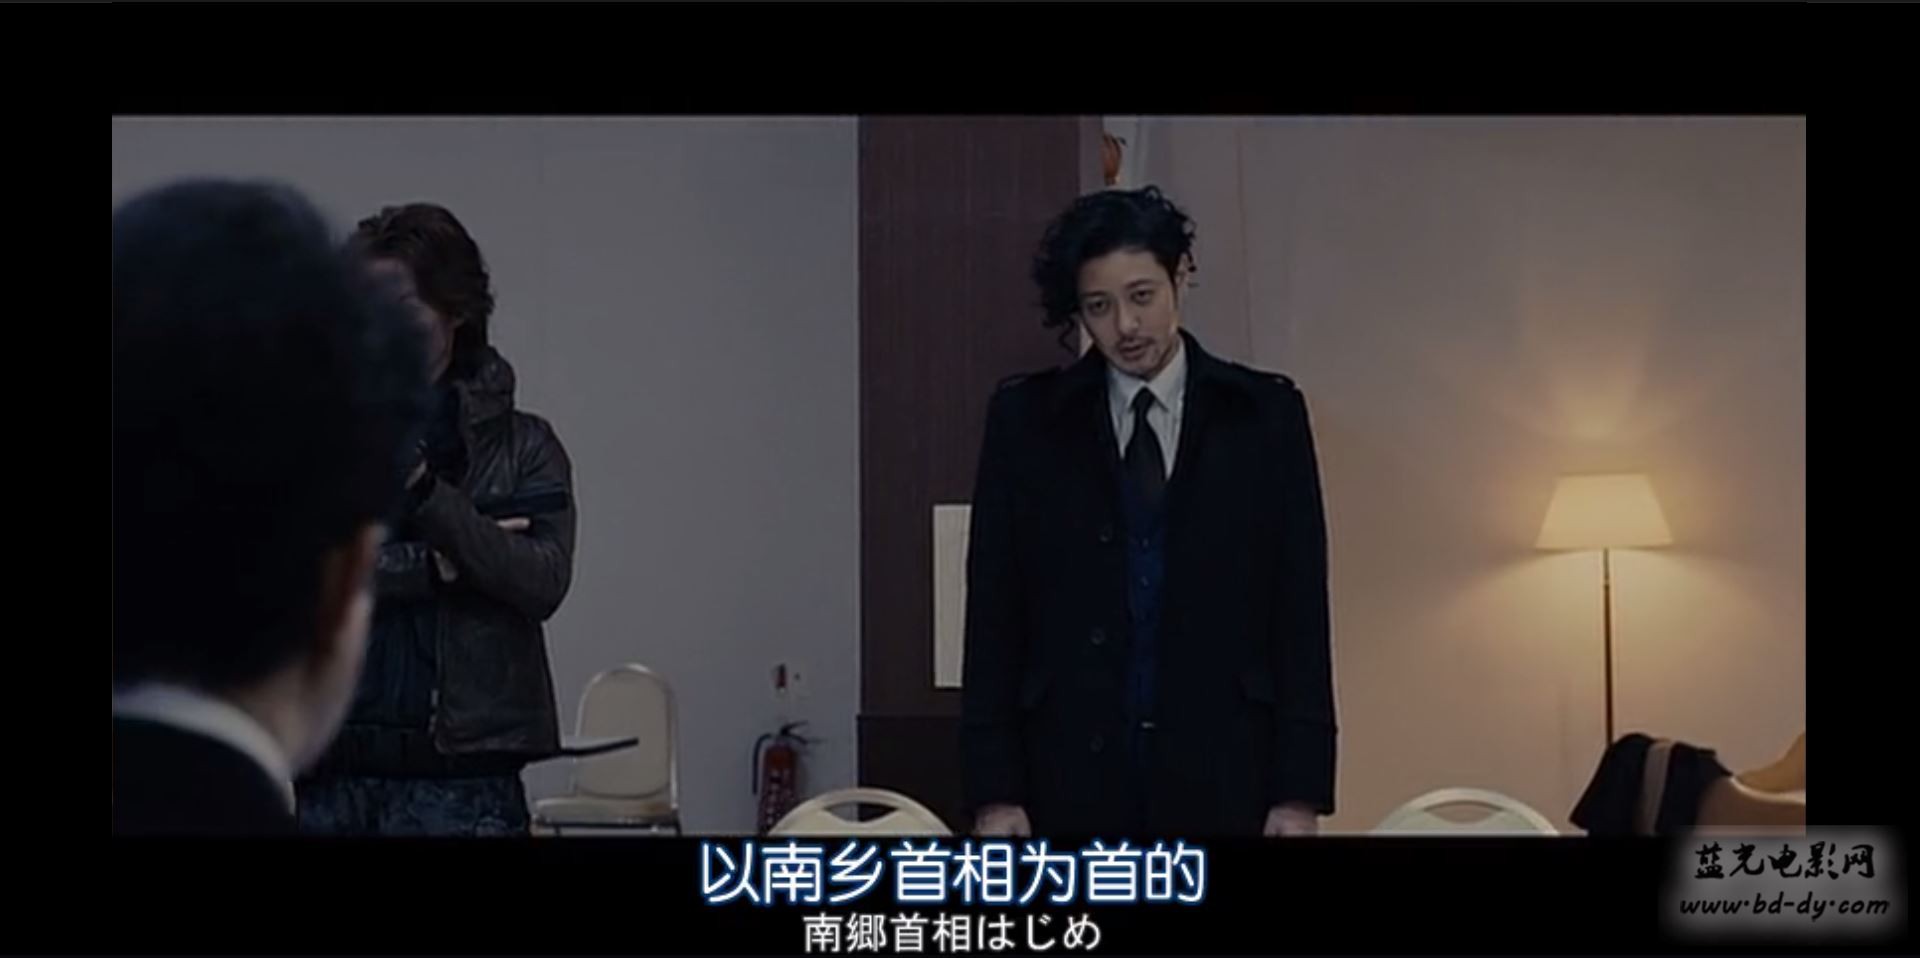 《S-最后的警官 电影版》2015日本动作犯罪.DVD.中日双字截图;jsessionid=tB9iH0MbZBA-ISgH3XetJN1wP6snfK3fGg-sXQtz